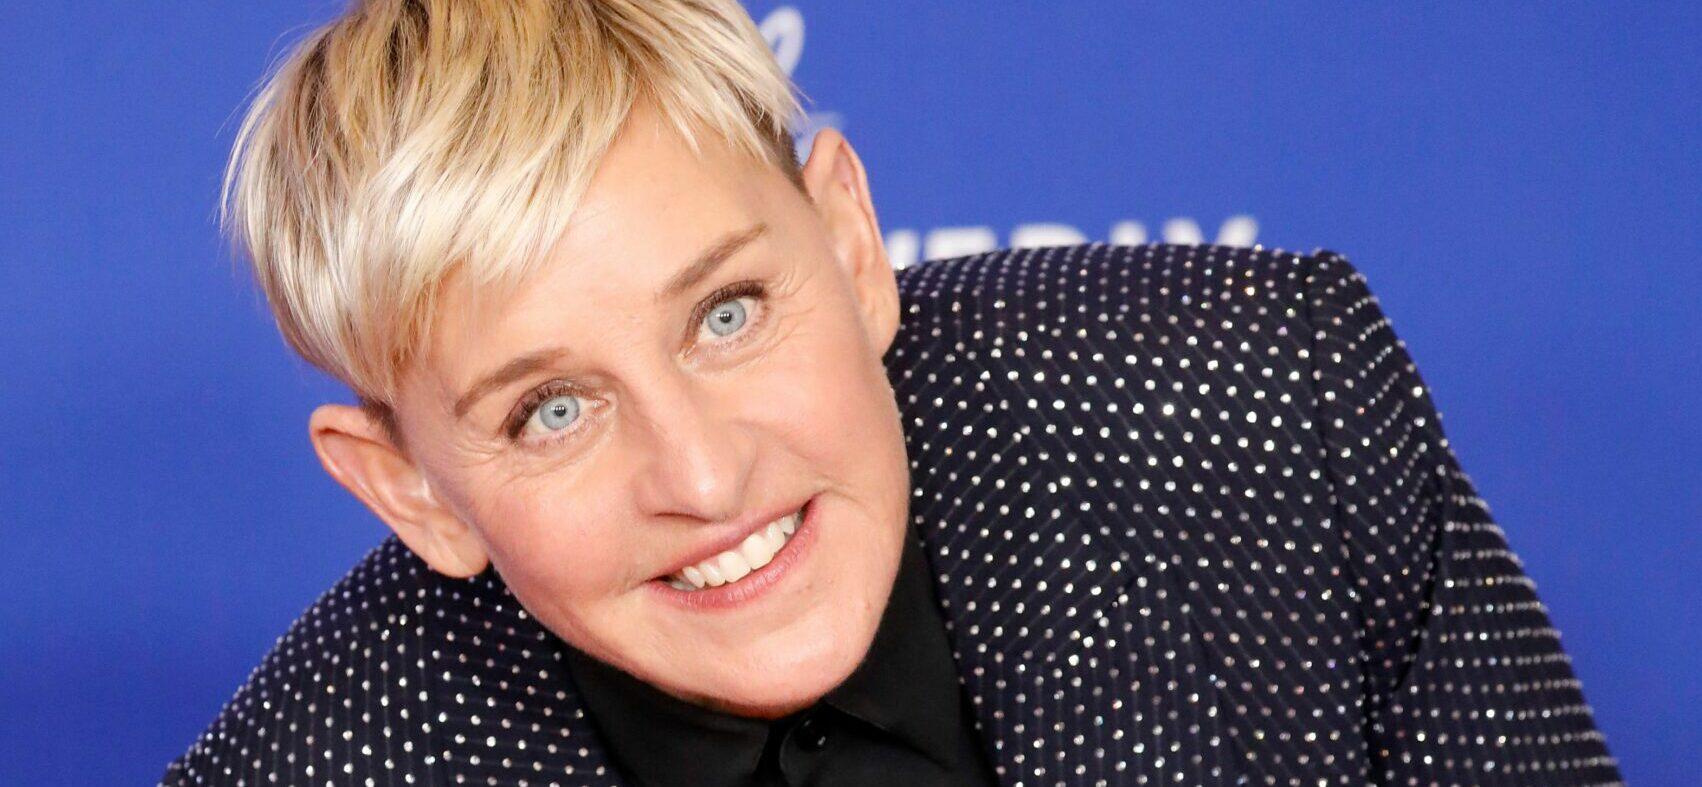 Award winner Ellen DeGeneres in the press room during the 77th Annual Golden Globe Awards at The Beverly Hilton Hotel on January 5, 2020 in Beverly Hills, California. 05 Jan 2020 Pictured: Carol Burnett. Photo credit: MEGA TheMegaAgency.com +1 888 505 6342 (Mega Agency TagID: MEGA582060_005.jpg) [Photo via Mega Agency]